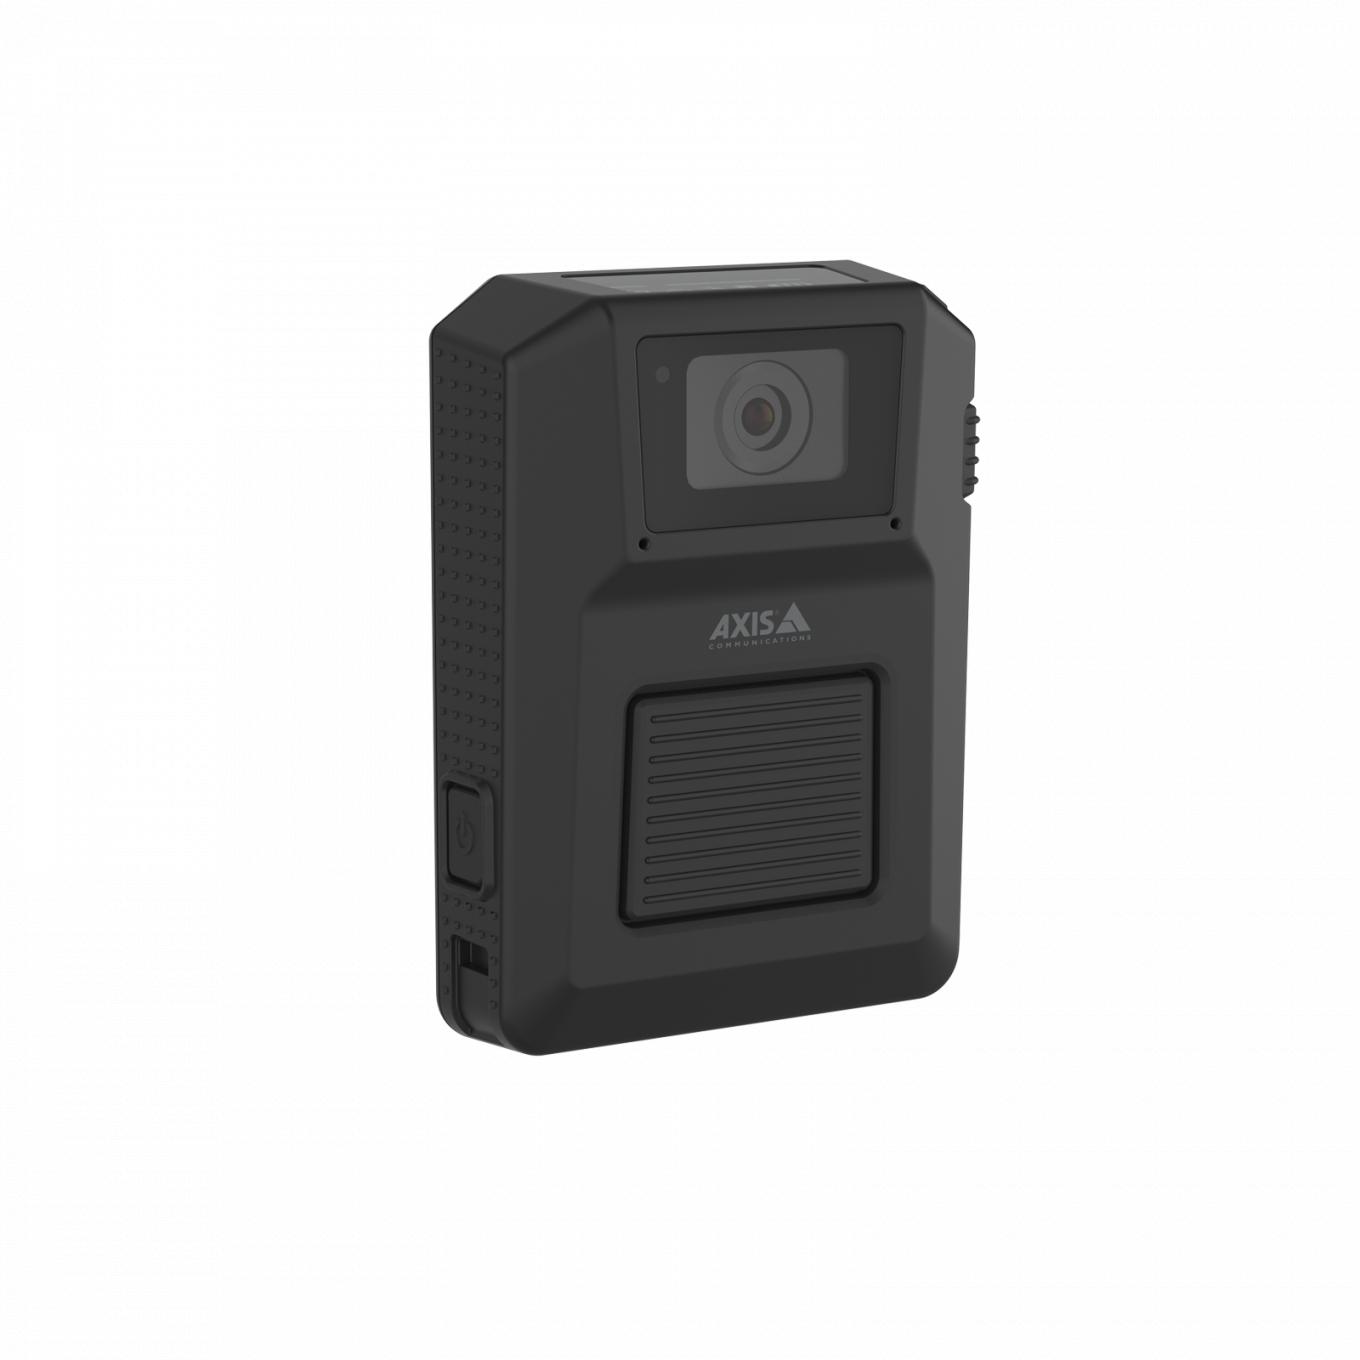 AXIS W101 Body Worn Camera (黒色)、右から見た図